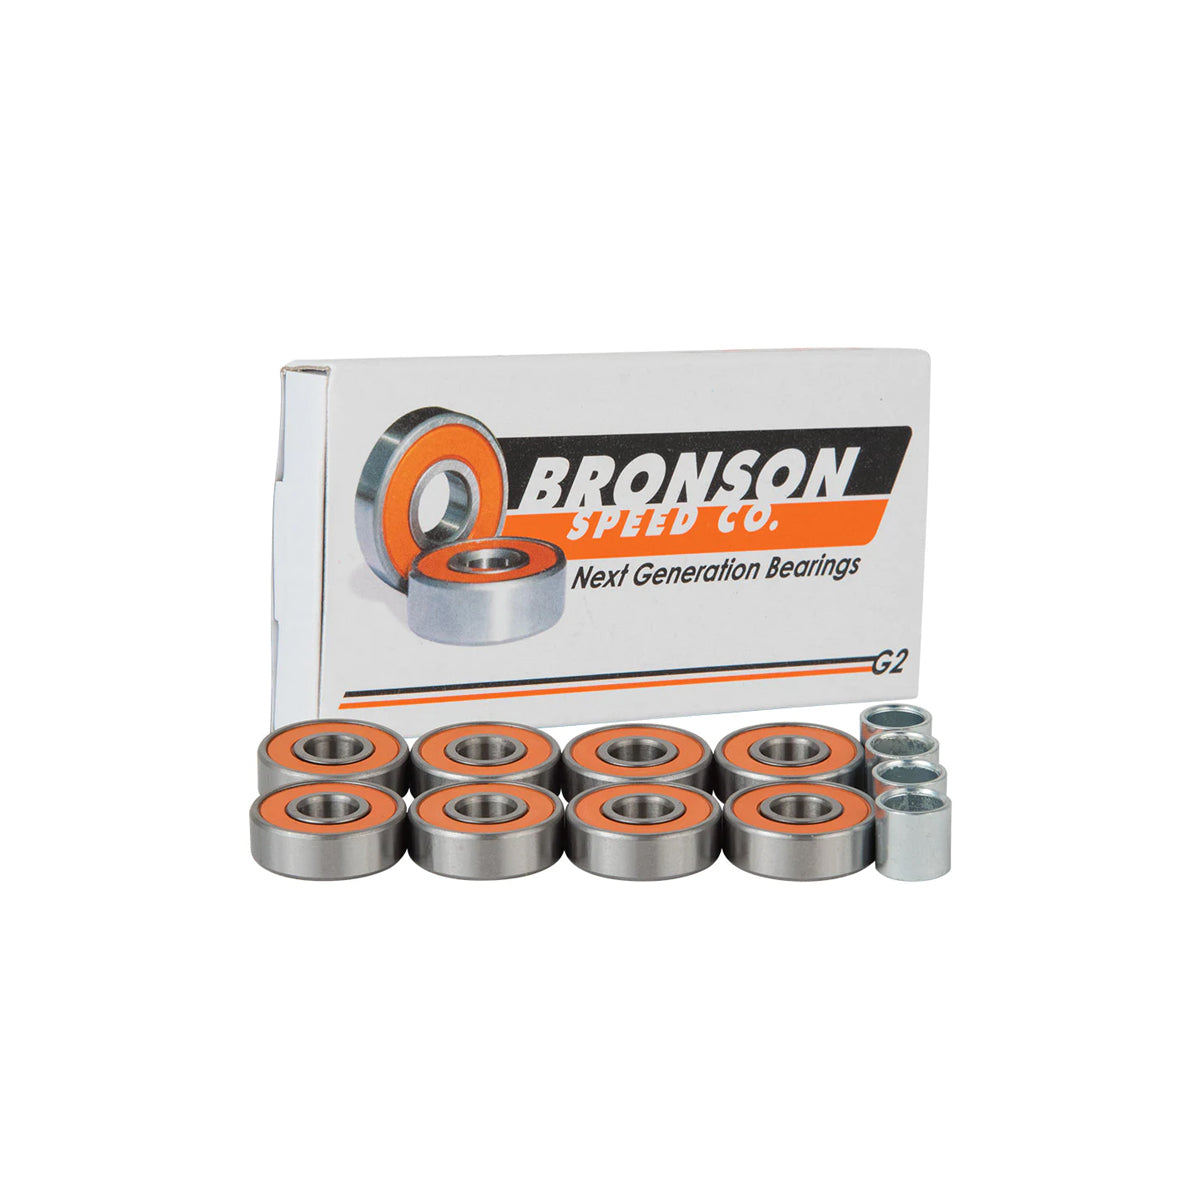 Bronson Speed Co. G2 Bearings - Apple Valley Emporium